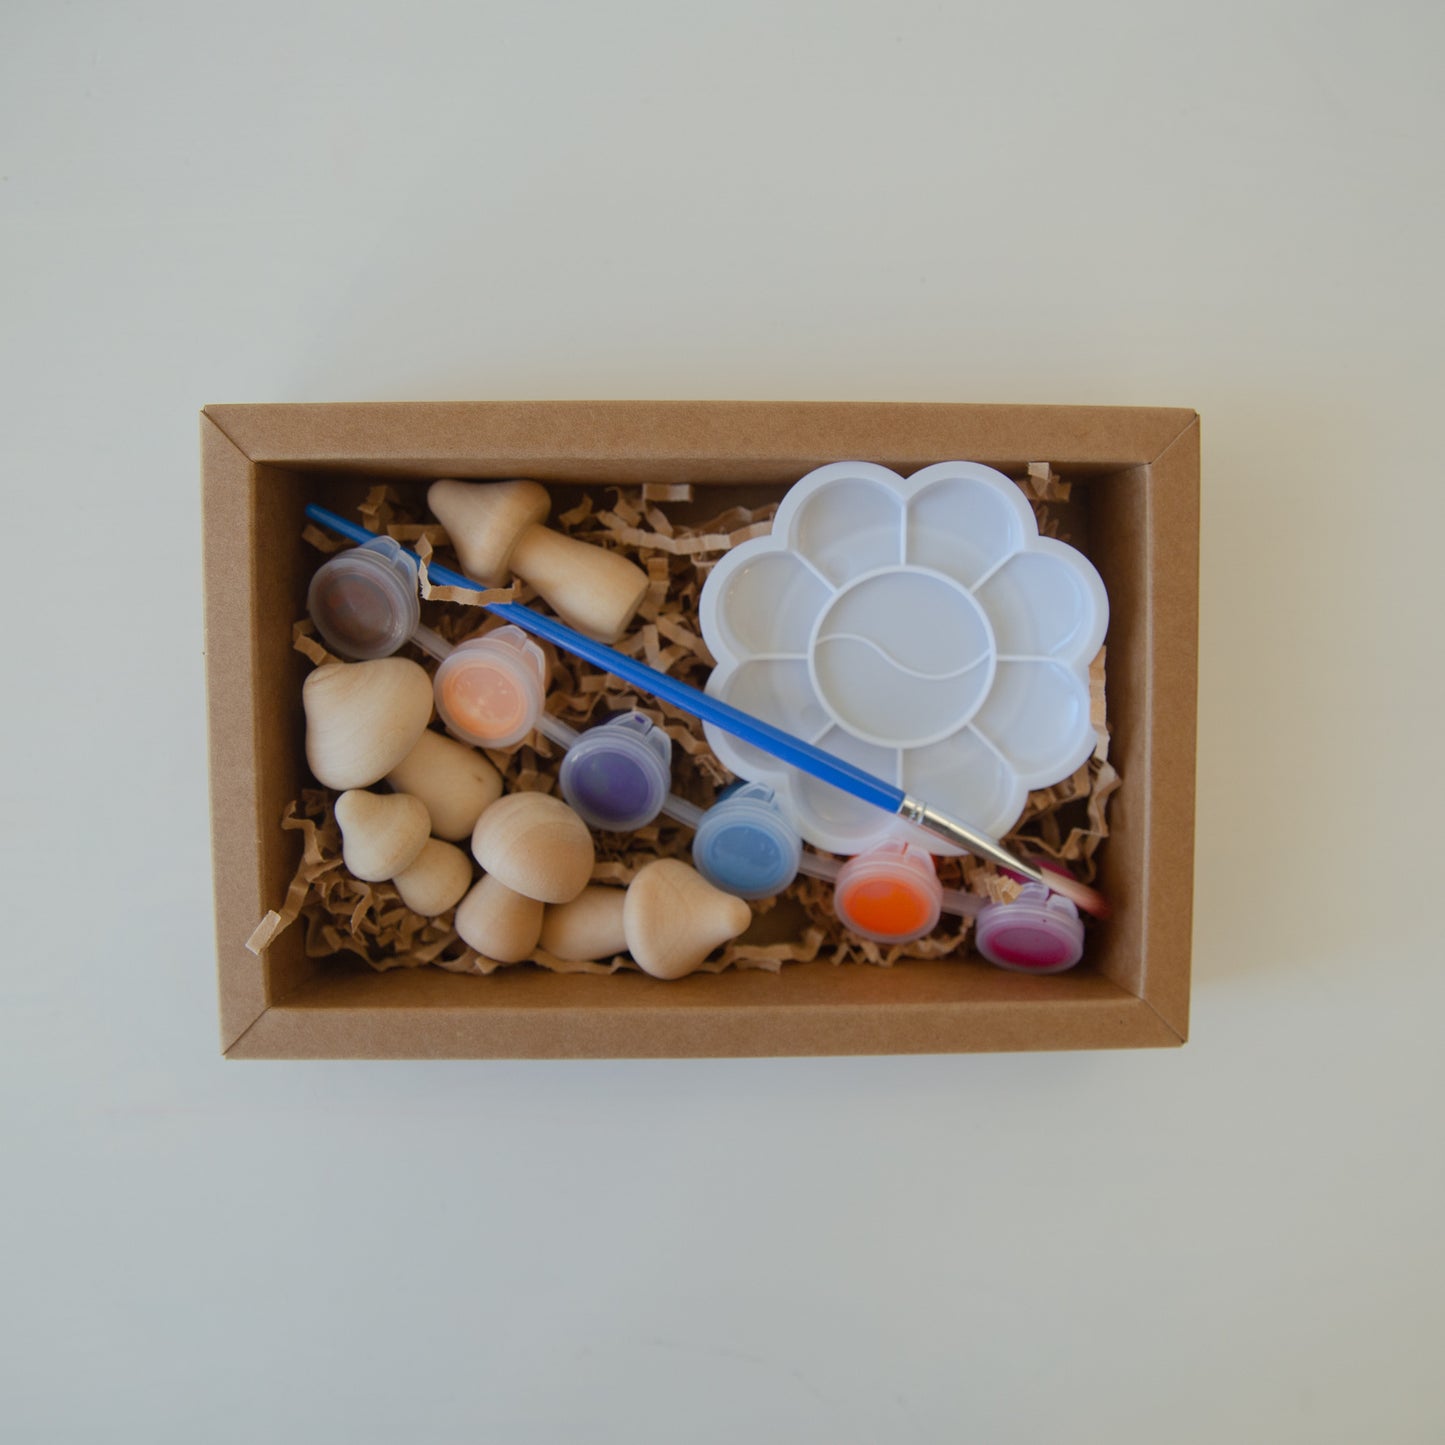 Paint Your Own Mushroom Kit